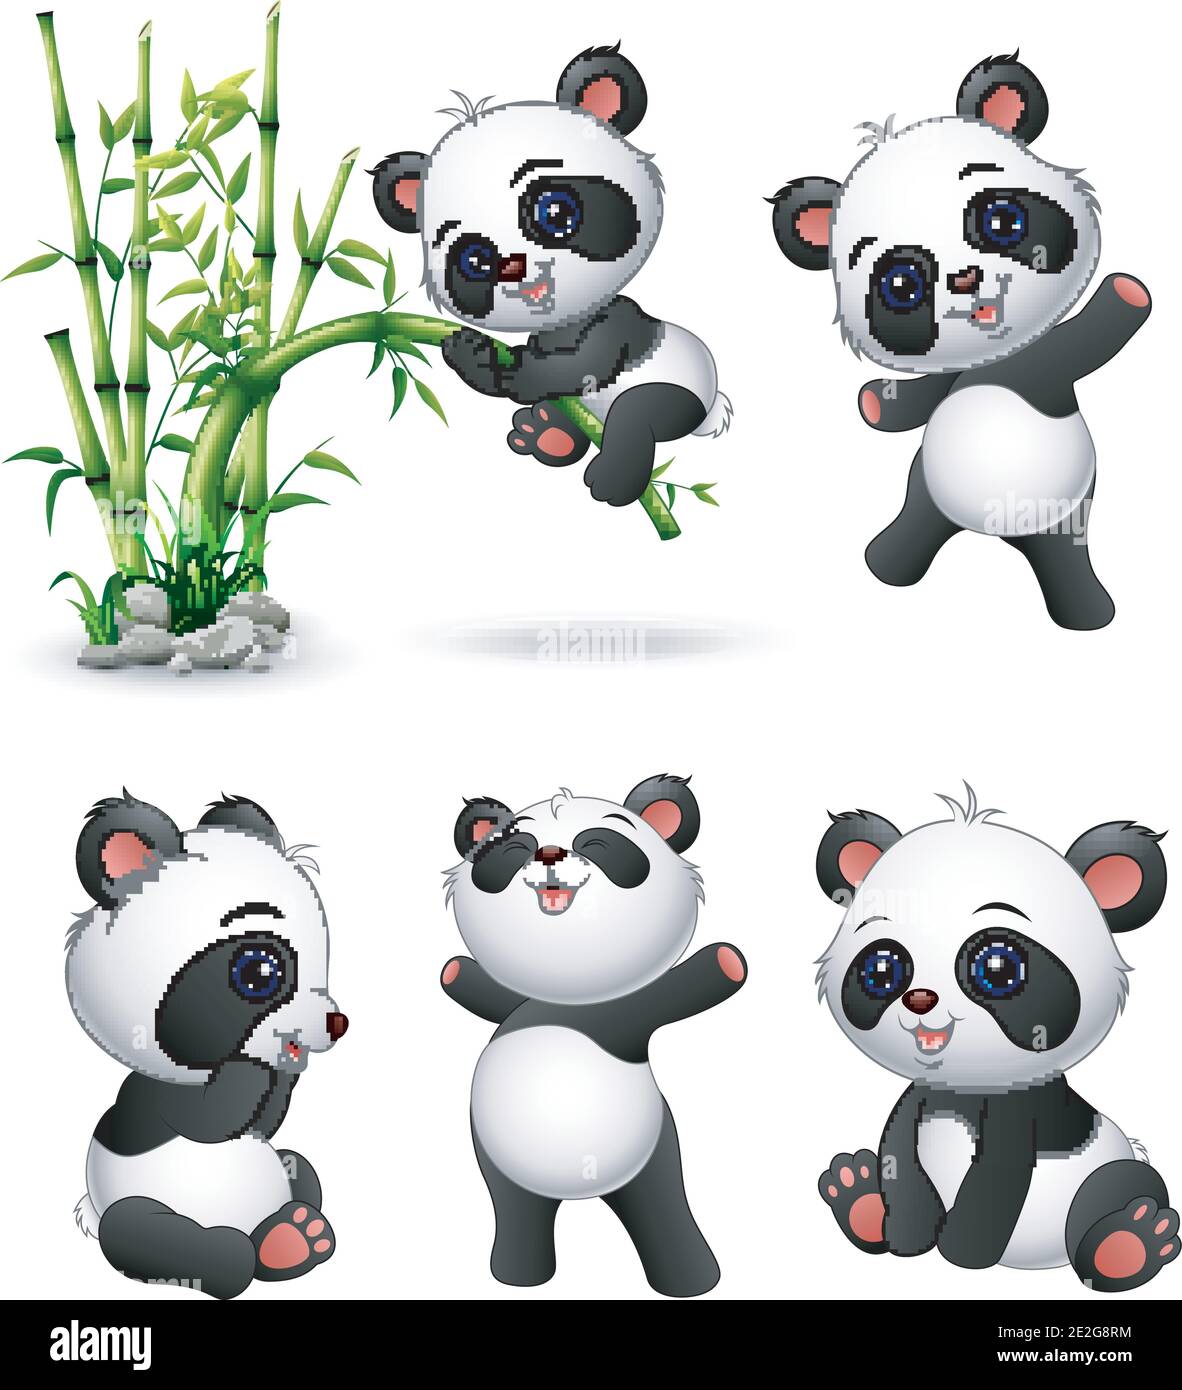 animated cute baby panda